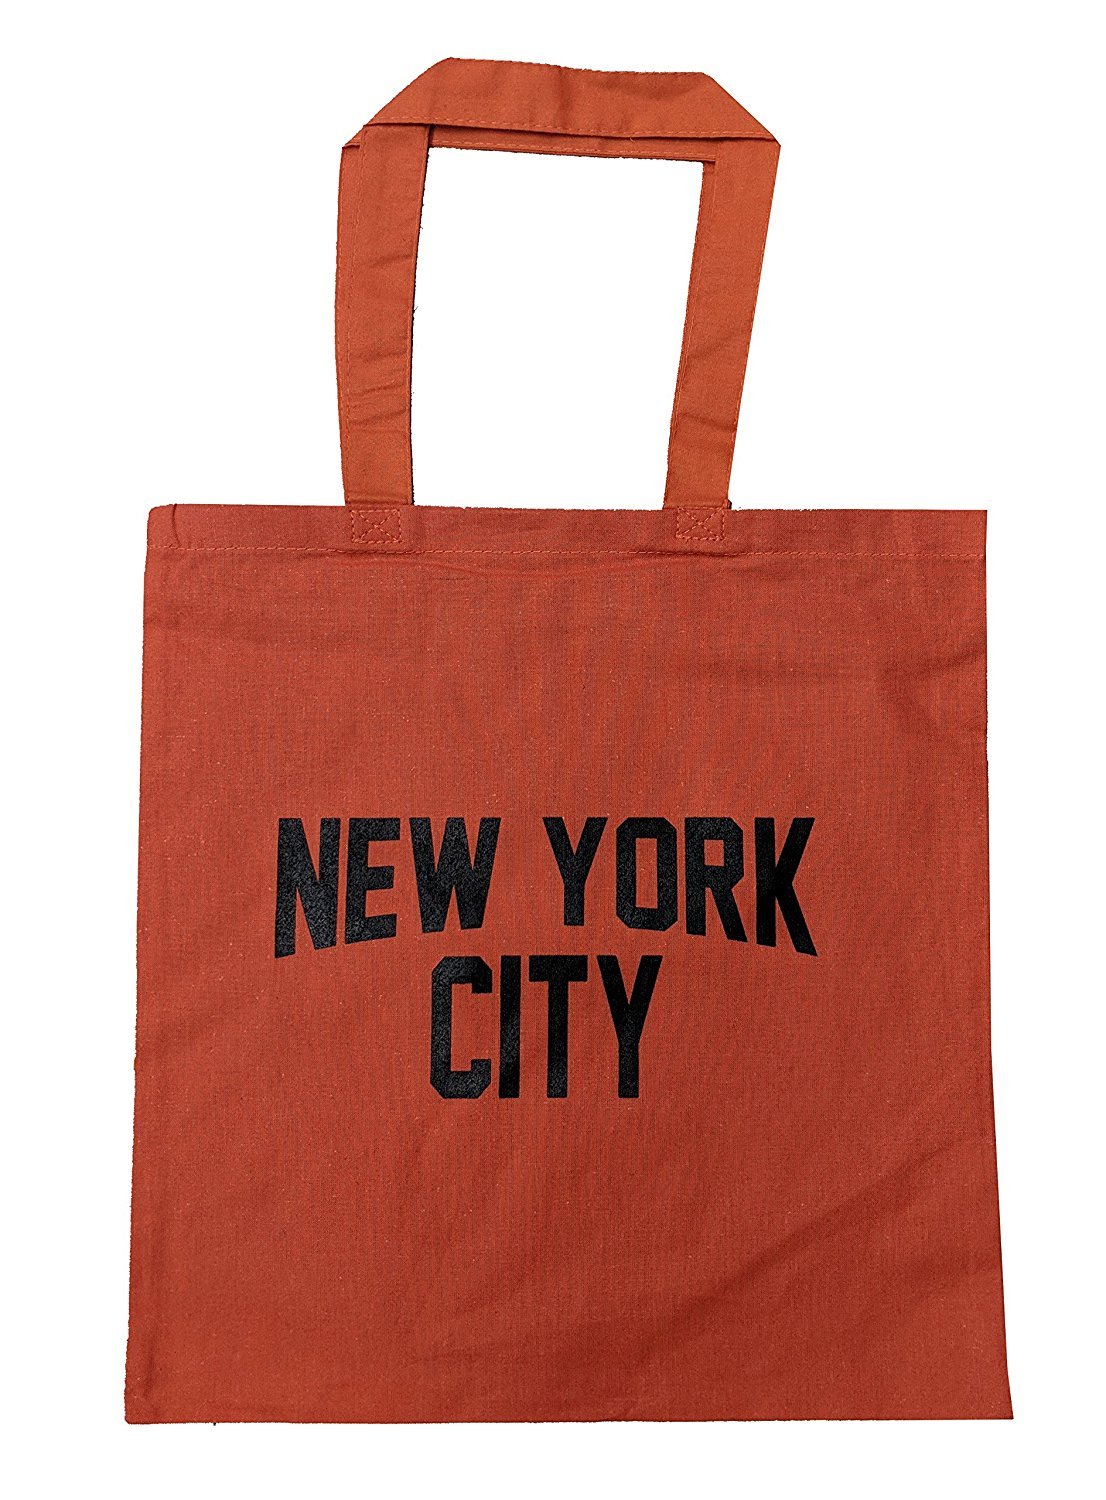 NYC Tote Bag New York City 100% Cotton Canvas Screenprinted (Orange)